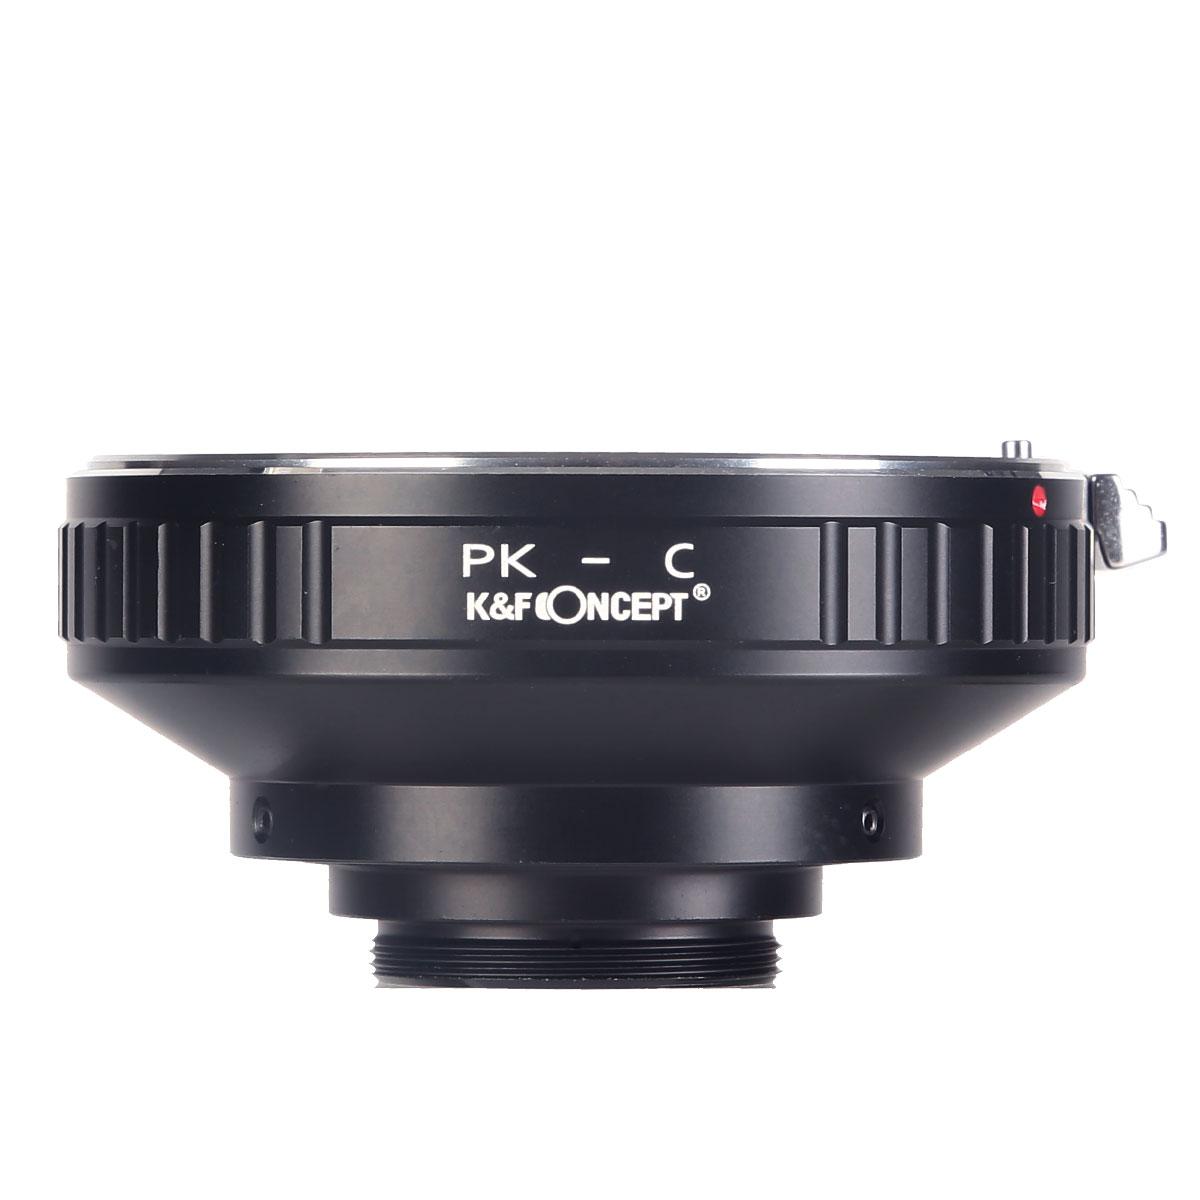 Pentax K Lenses to C Lens Mount Adapter K&F Concept M17231 Lens Adapter